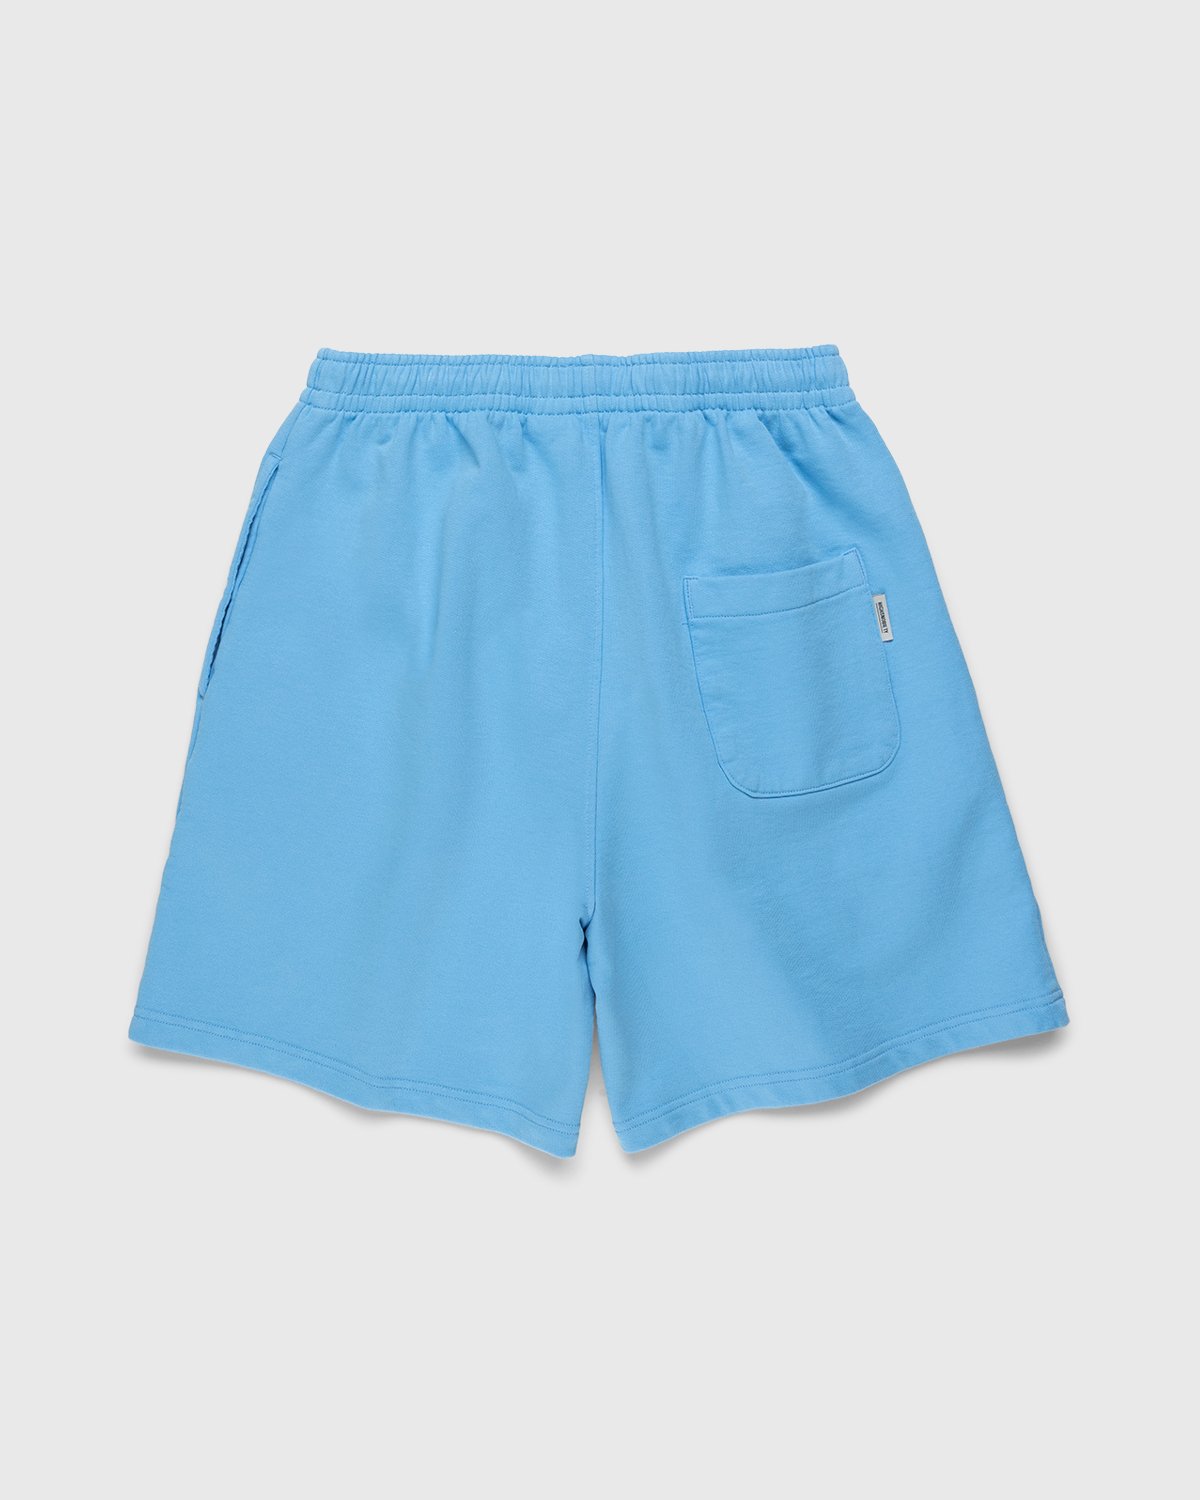 Highsnobiety - Staples Shorts Sky Blue - Clothing - Blue - Image 2